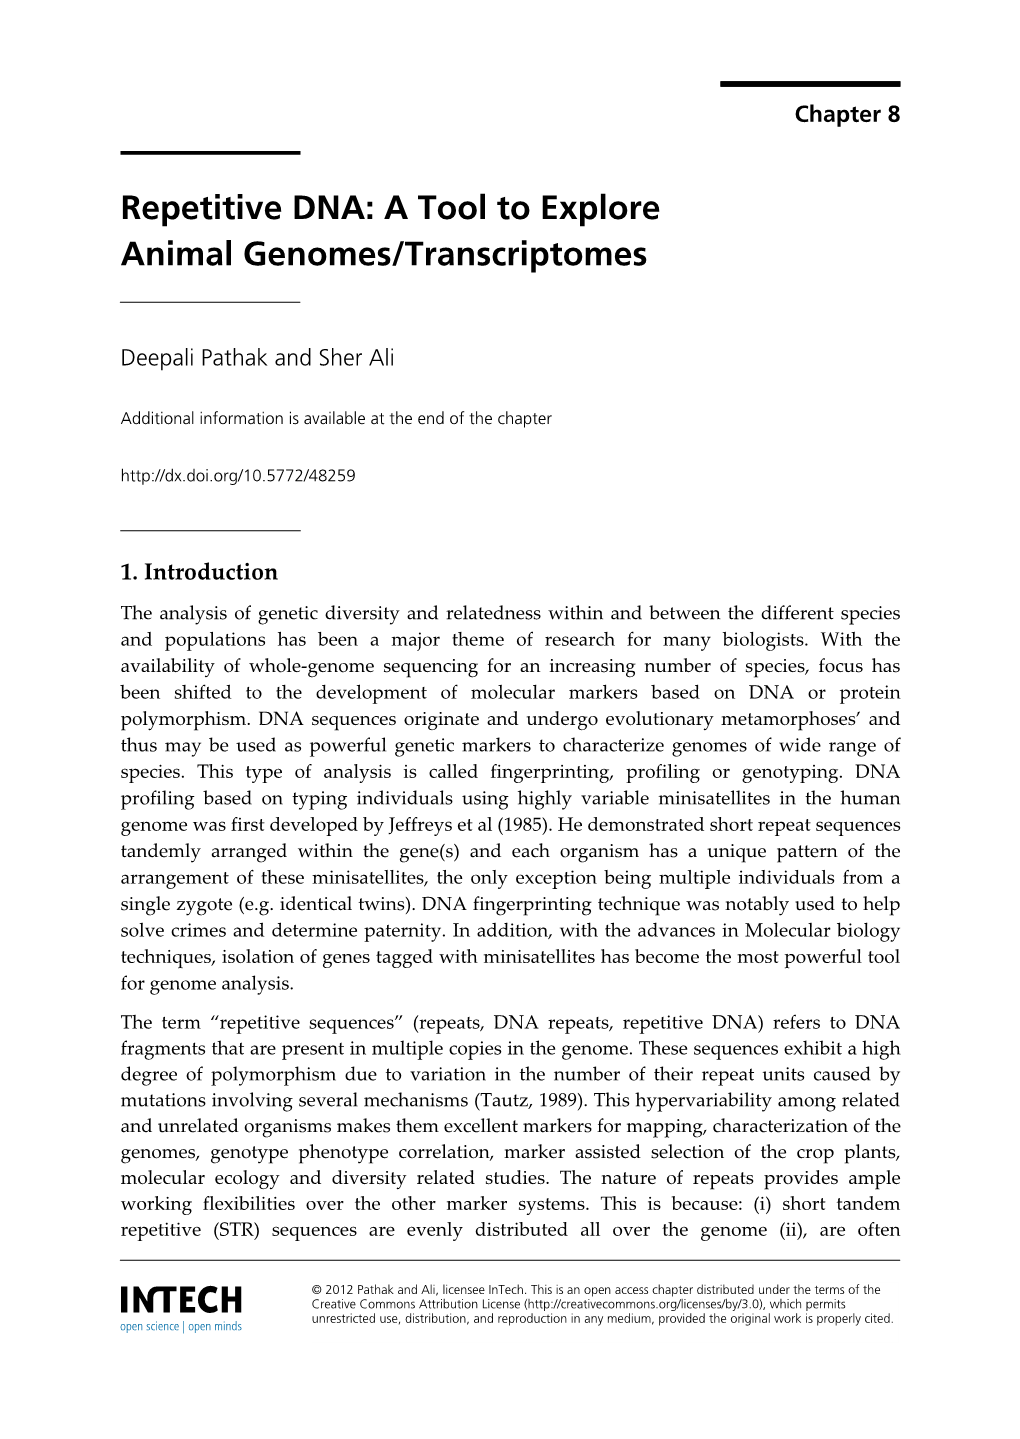 Repetitive DNA: a Tool to Explore Animal Genomes/Transcriptomes